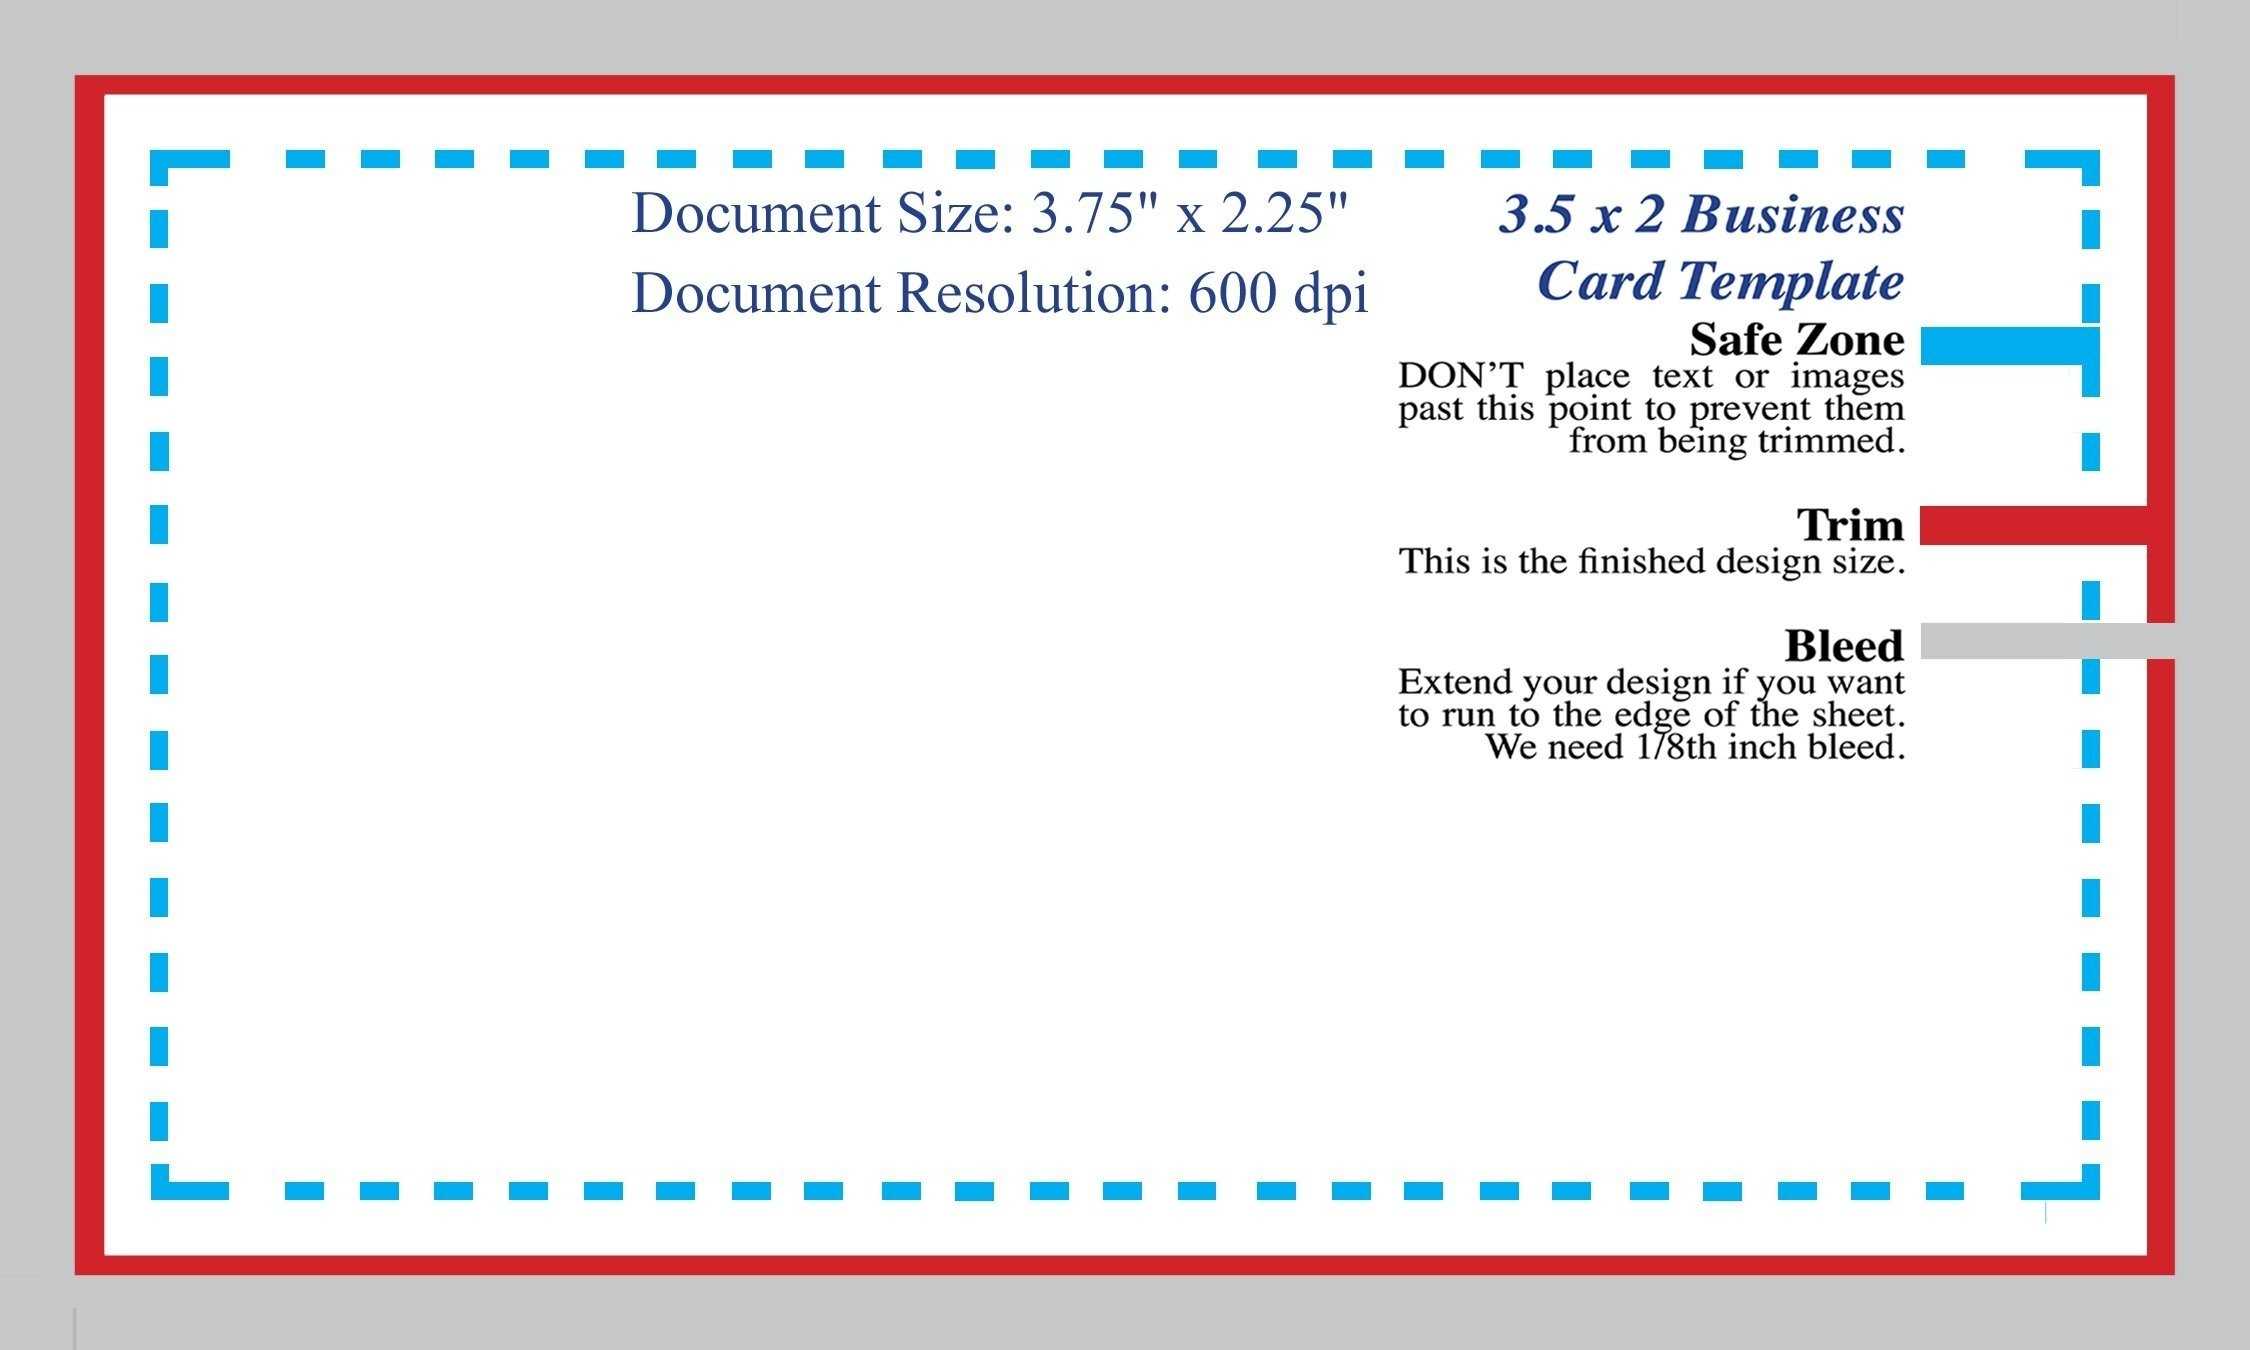 025 Blank Business Card Template Free Ideas Psd Photoshop Or Regarding Blank Business Card Template Psd